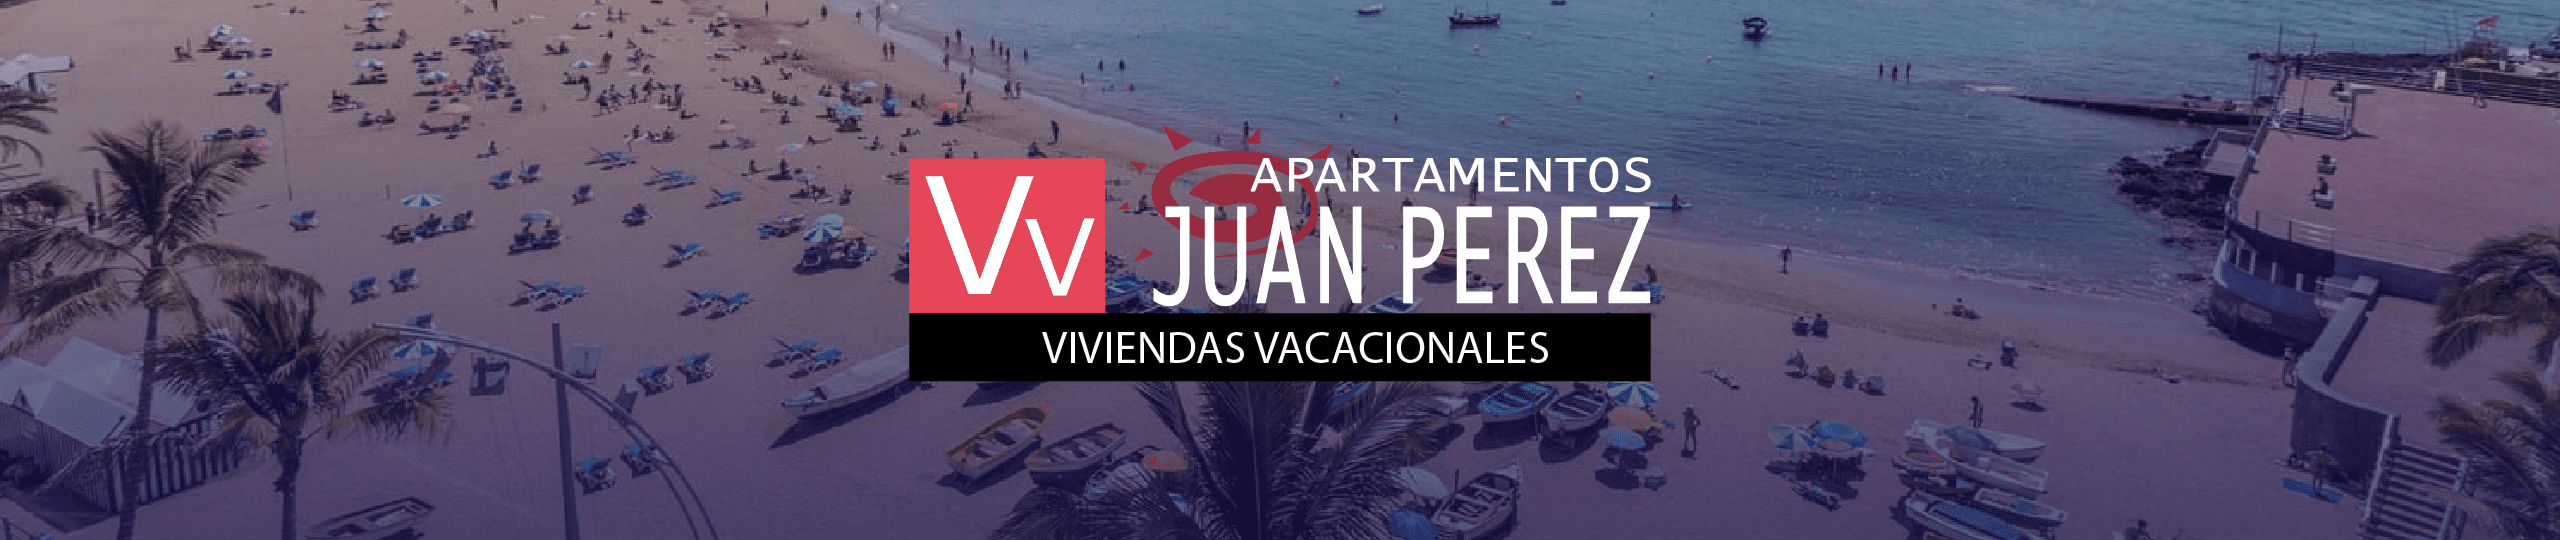 Apartamentos Juan Perez